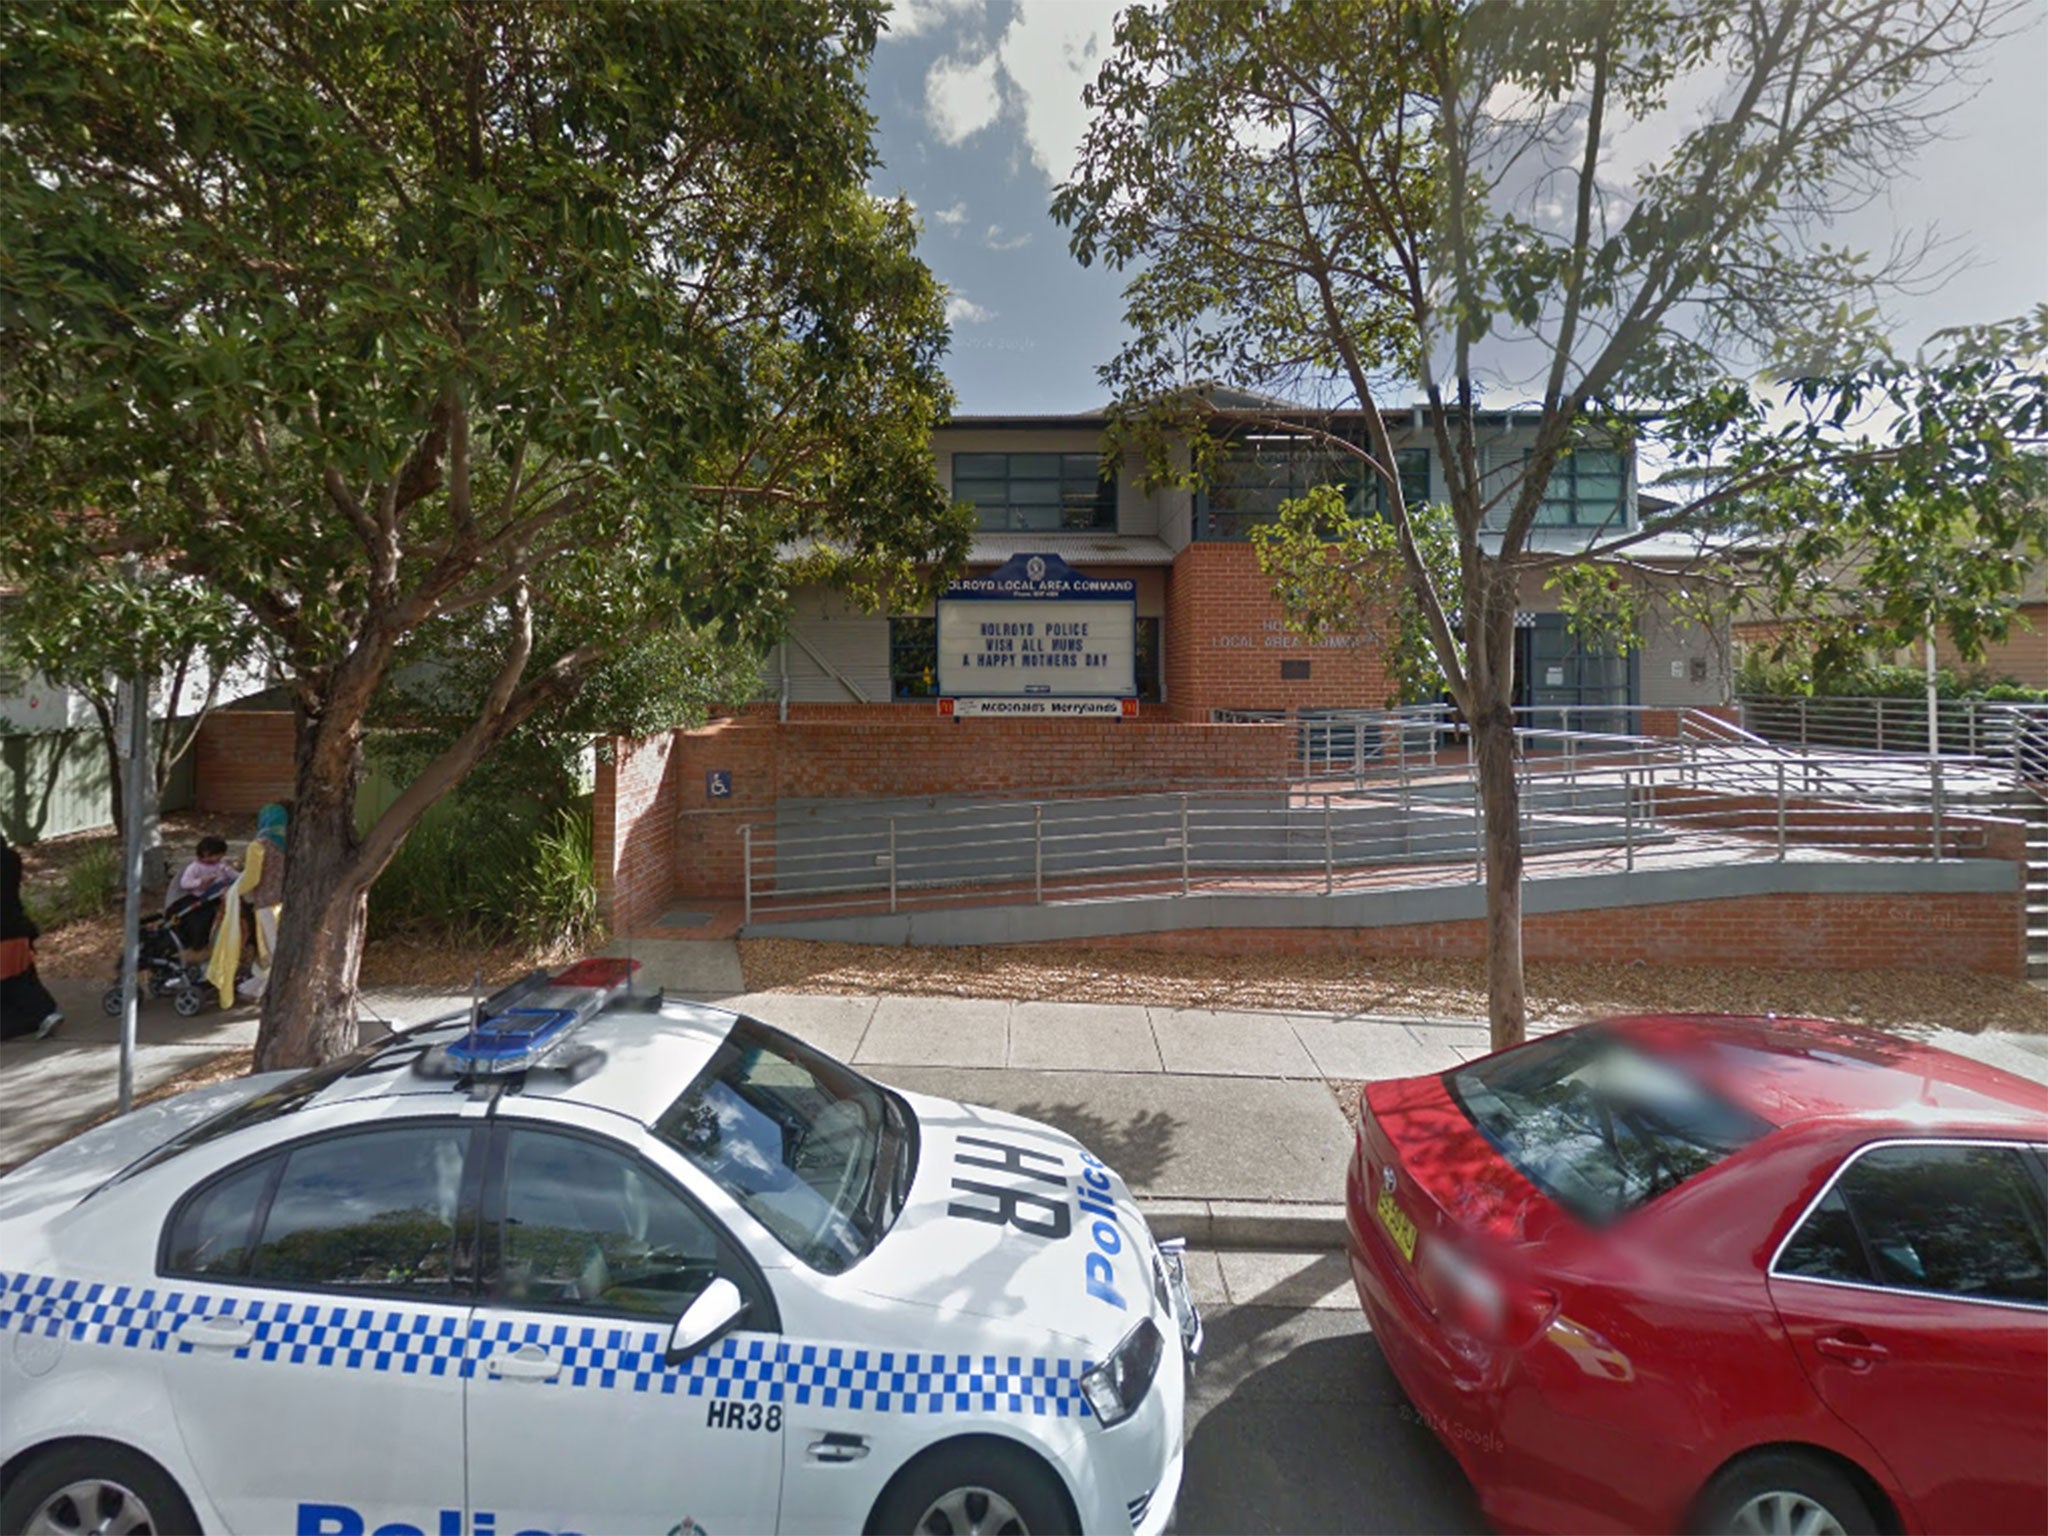 Merrylands Police Station on Memorial Avenue in western Sydney